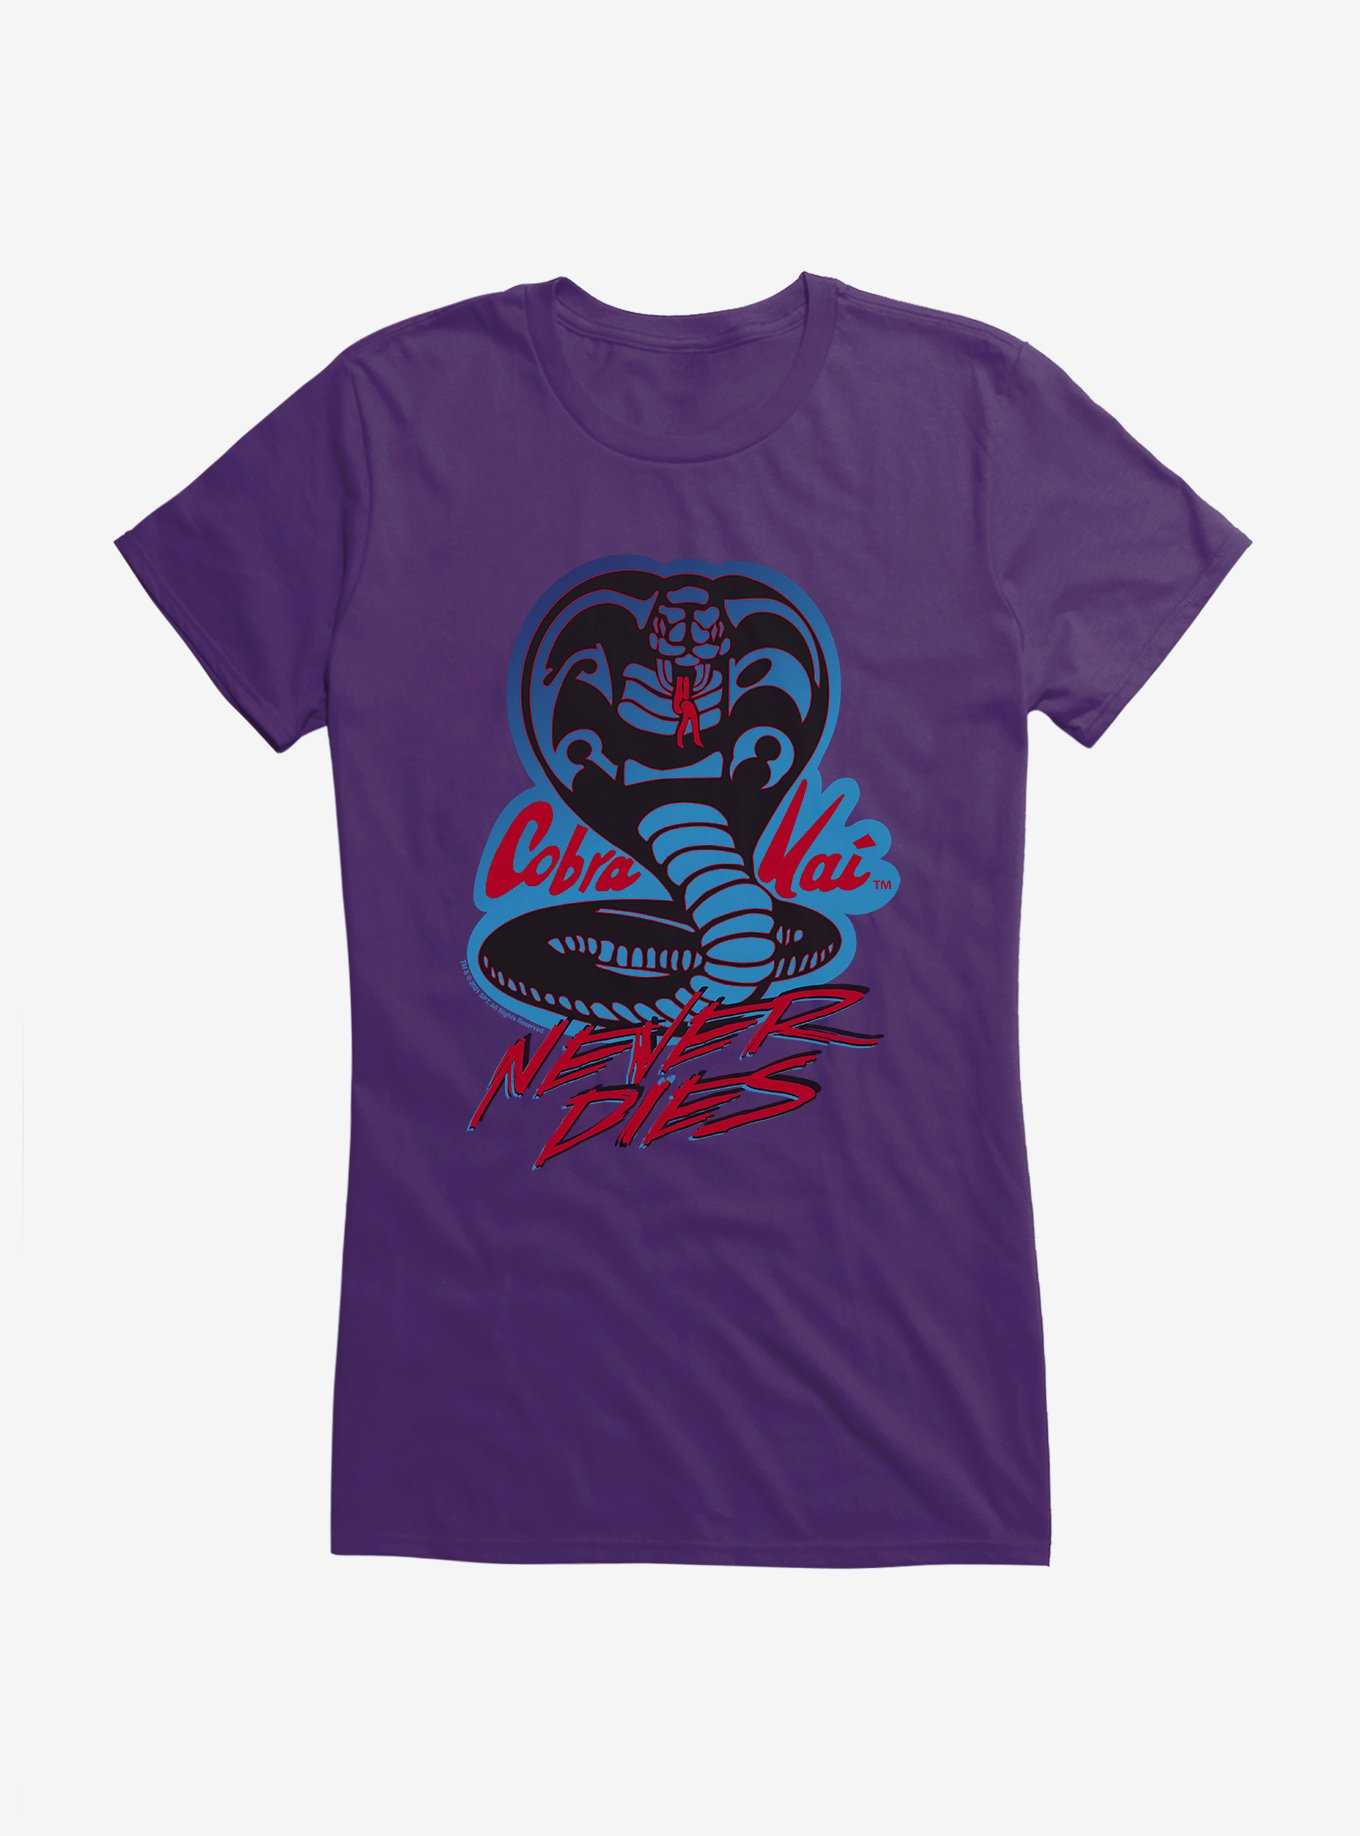 Cobra Kai Never Dies Girls T-Shirt, , hi-res